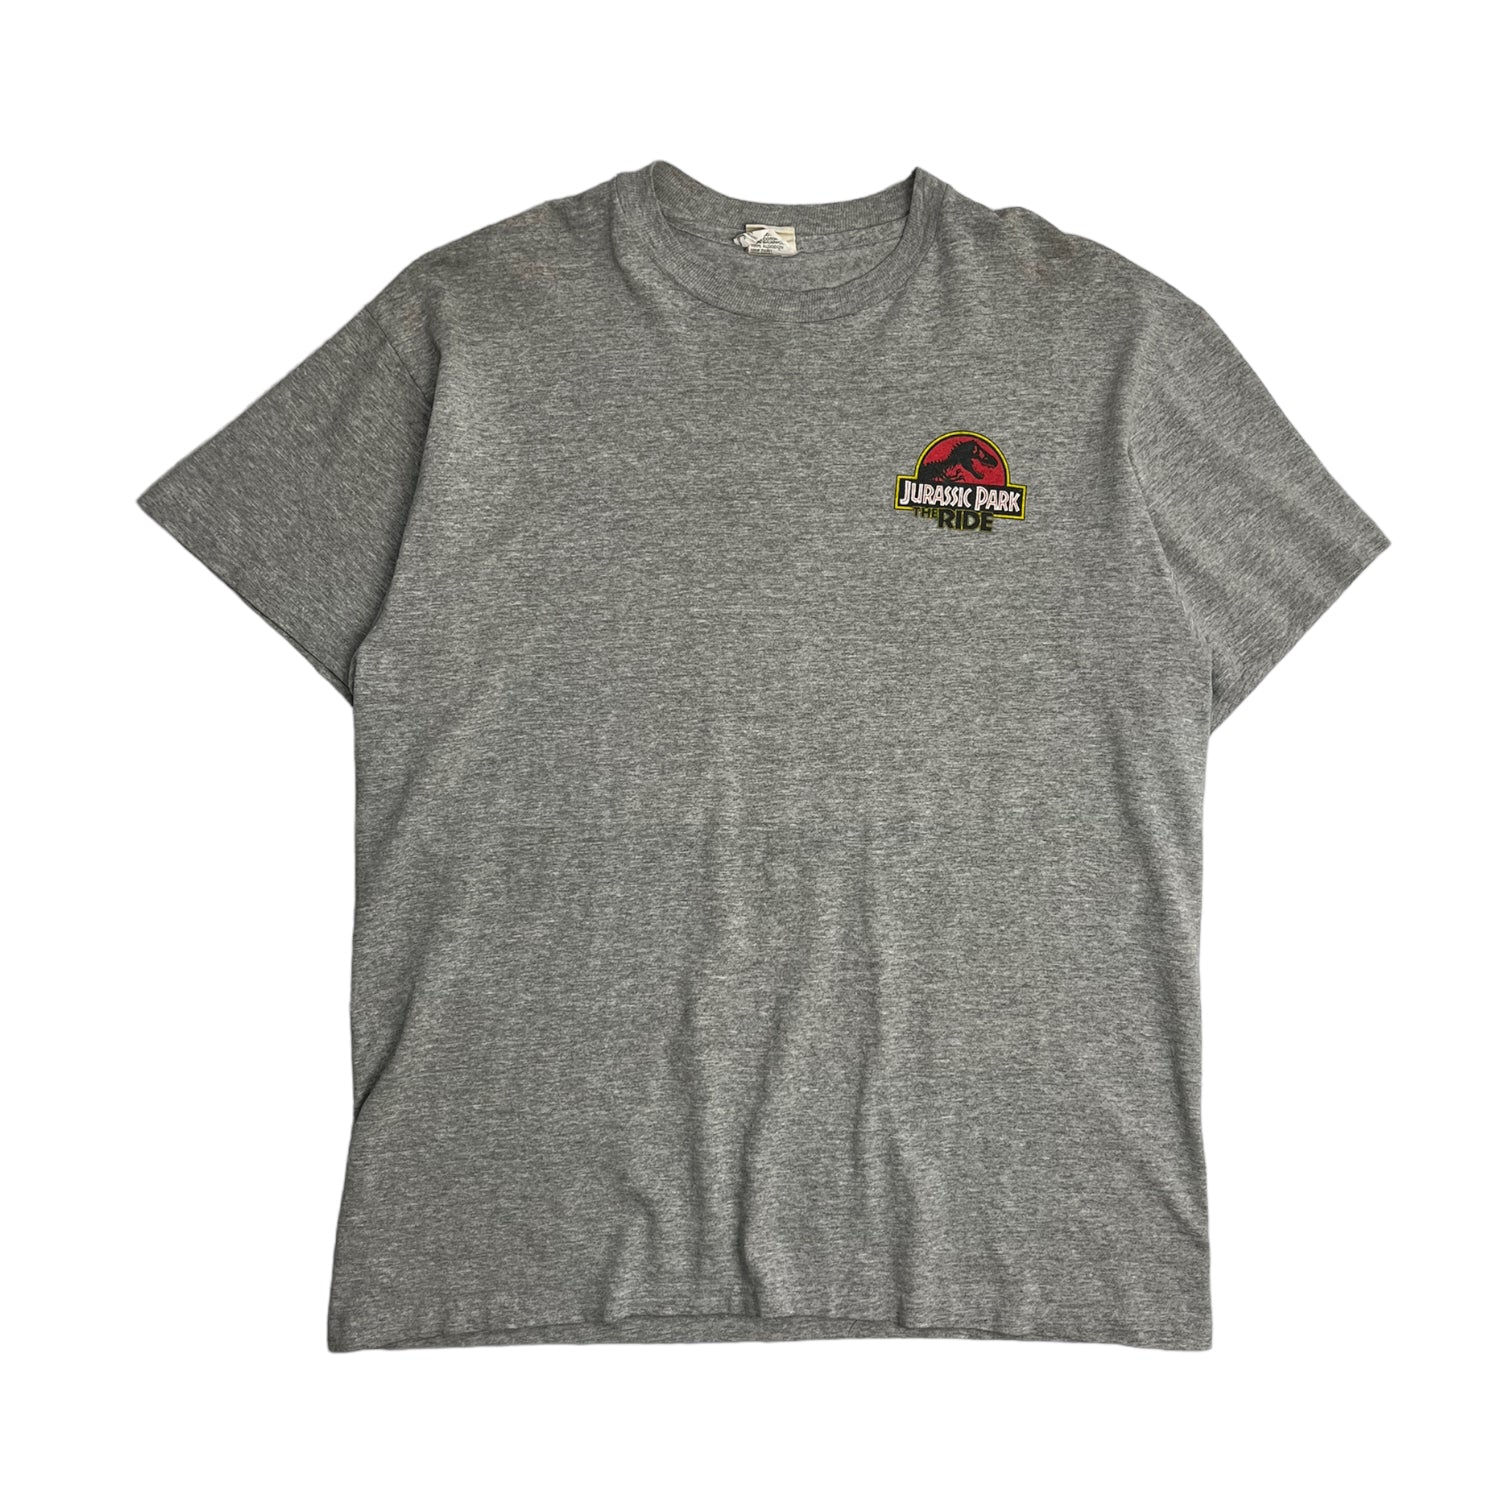 1996 Jurassic Park The Ride “Talkin To Me” T-Shirt